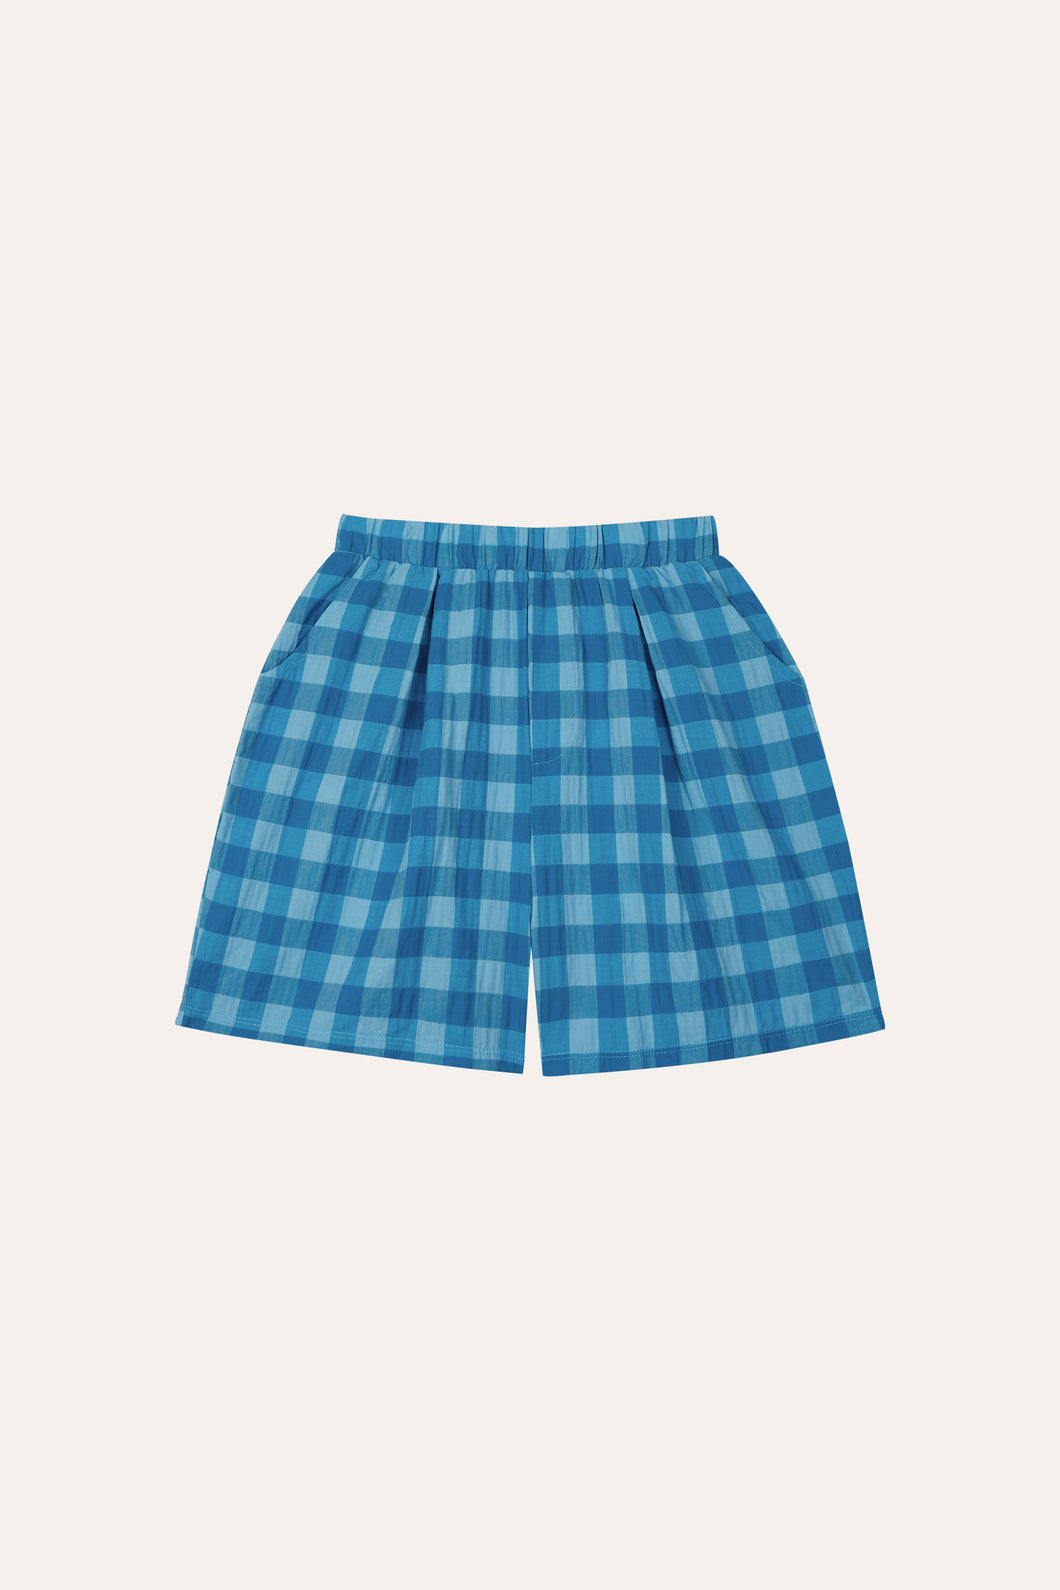 The Campamento / Blue Checked Shorts